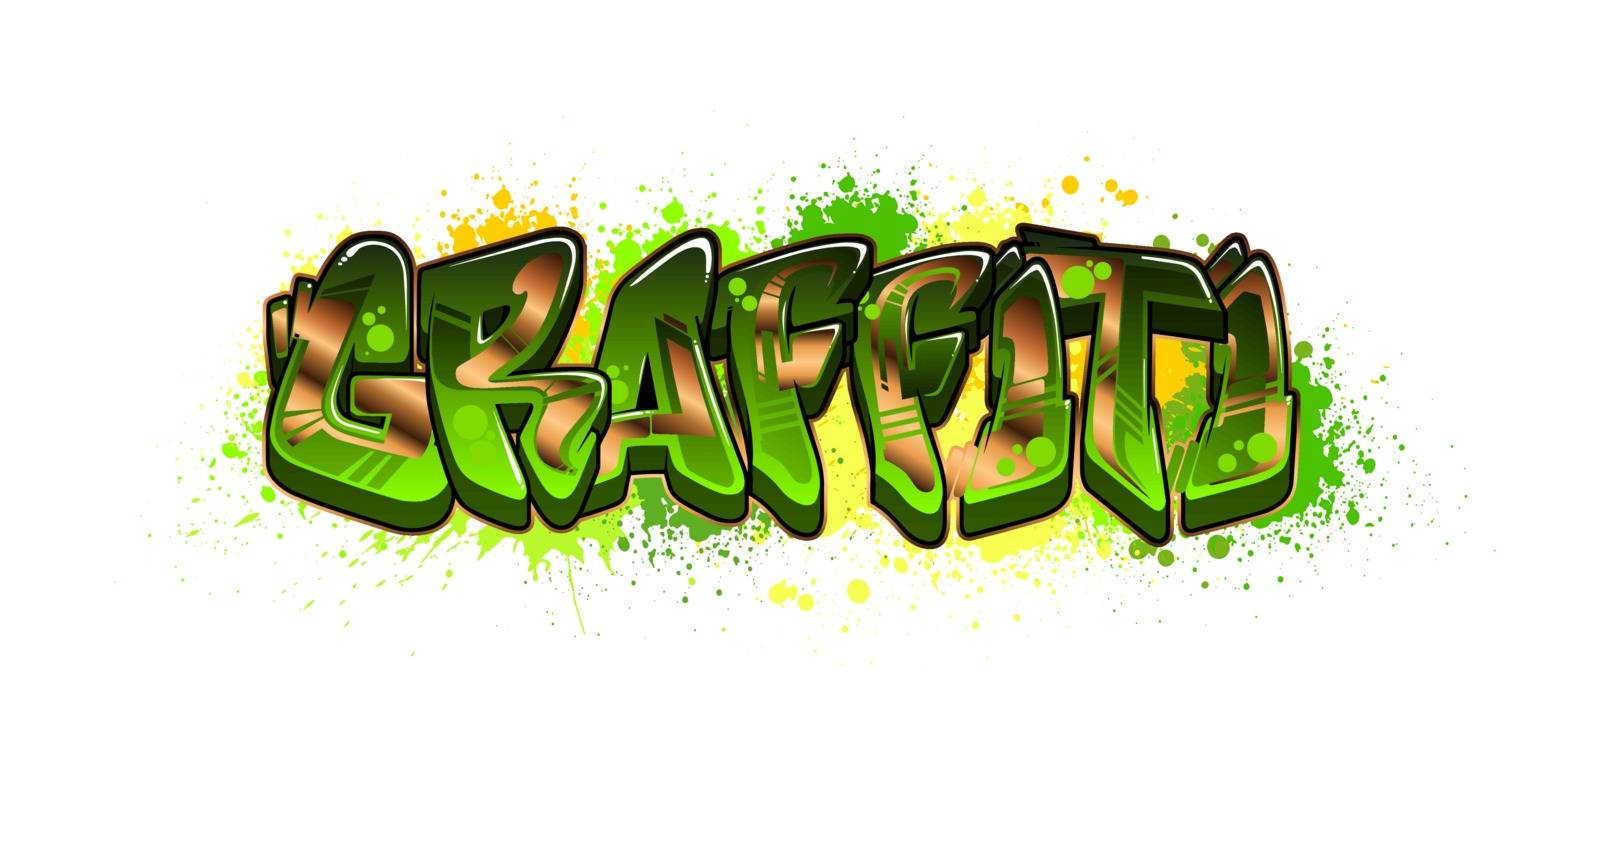 Graffiti Text Logotype Design by mindgem